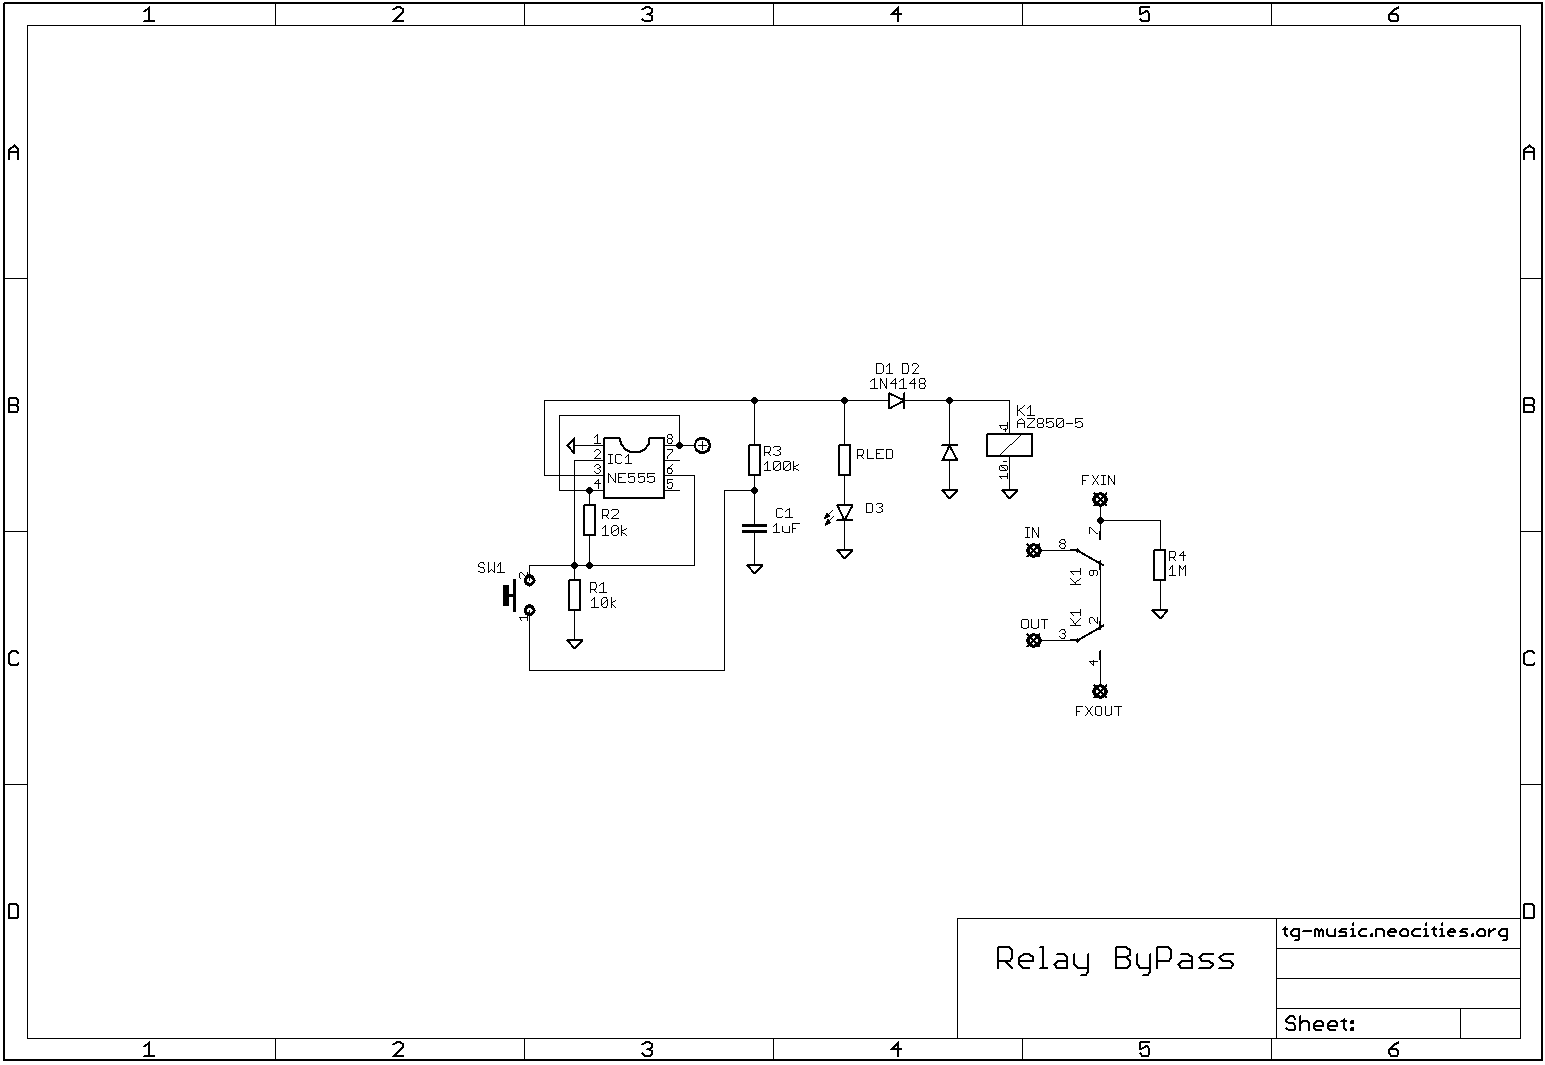 ne555 latching relay bypass Schematic